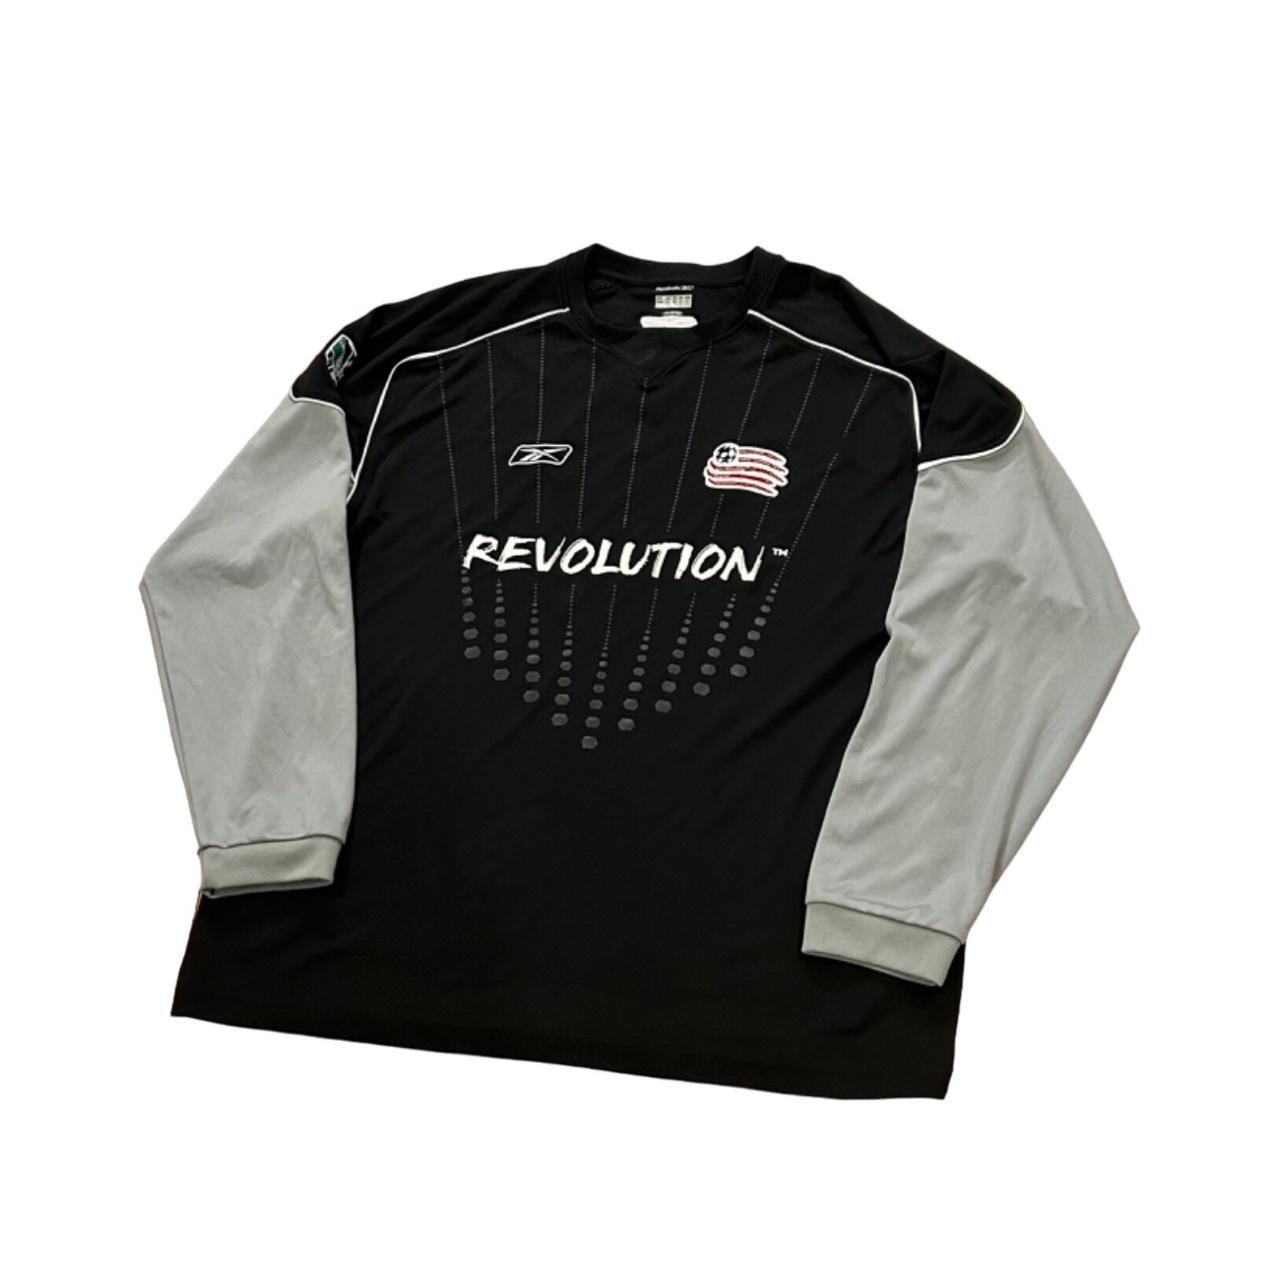 Reebok New England Revolution MLS Jerseys for sale